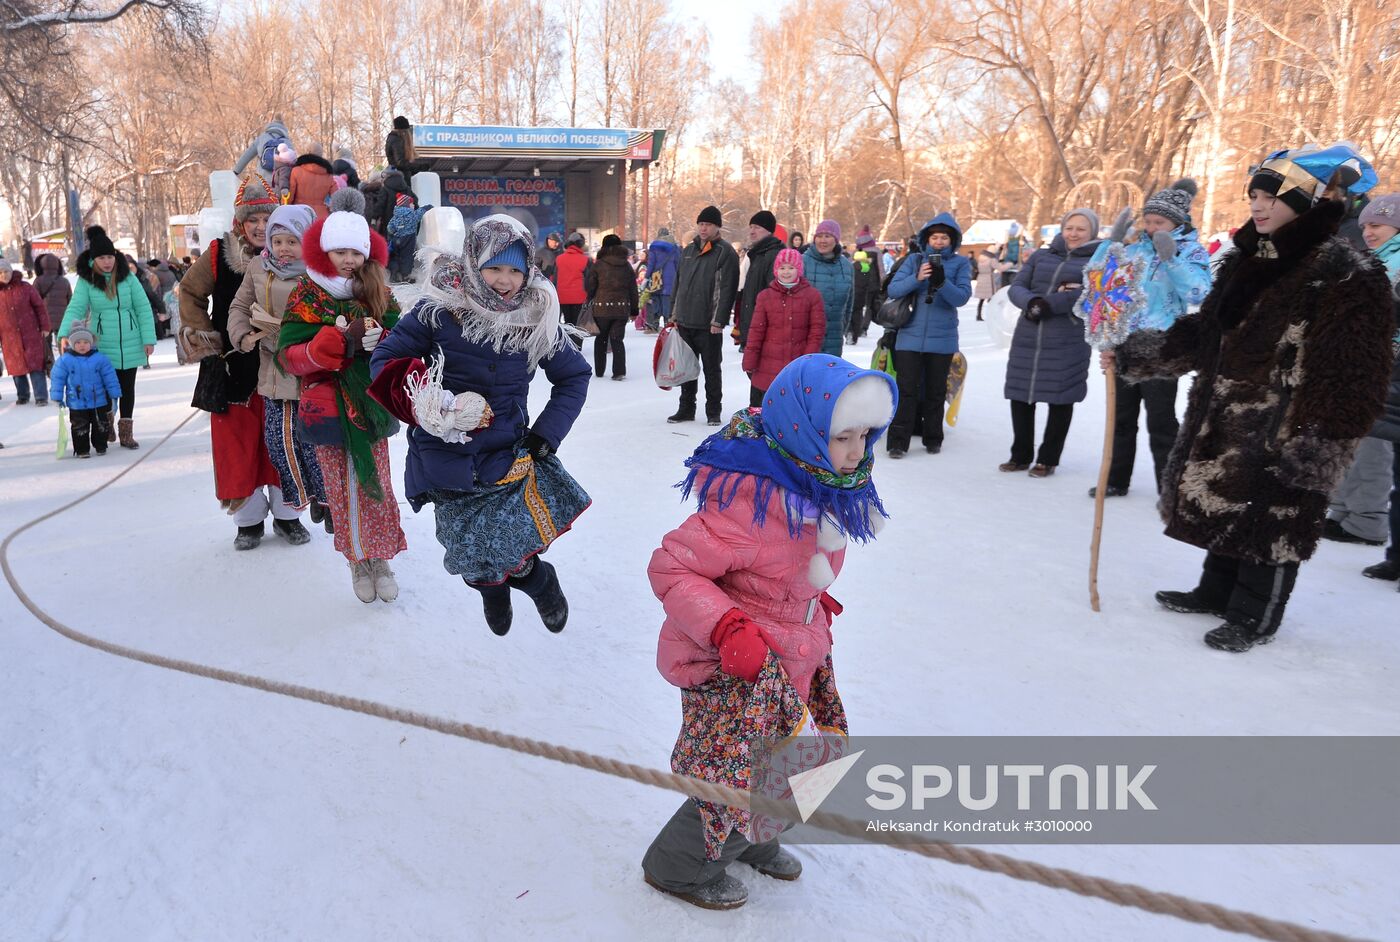 Svyatki 2017 festival of entertainment and fun in Chelyabinsk Region